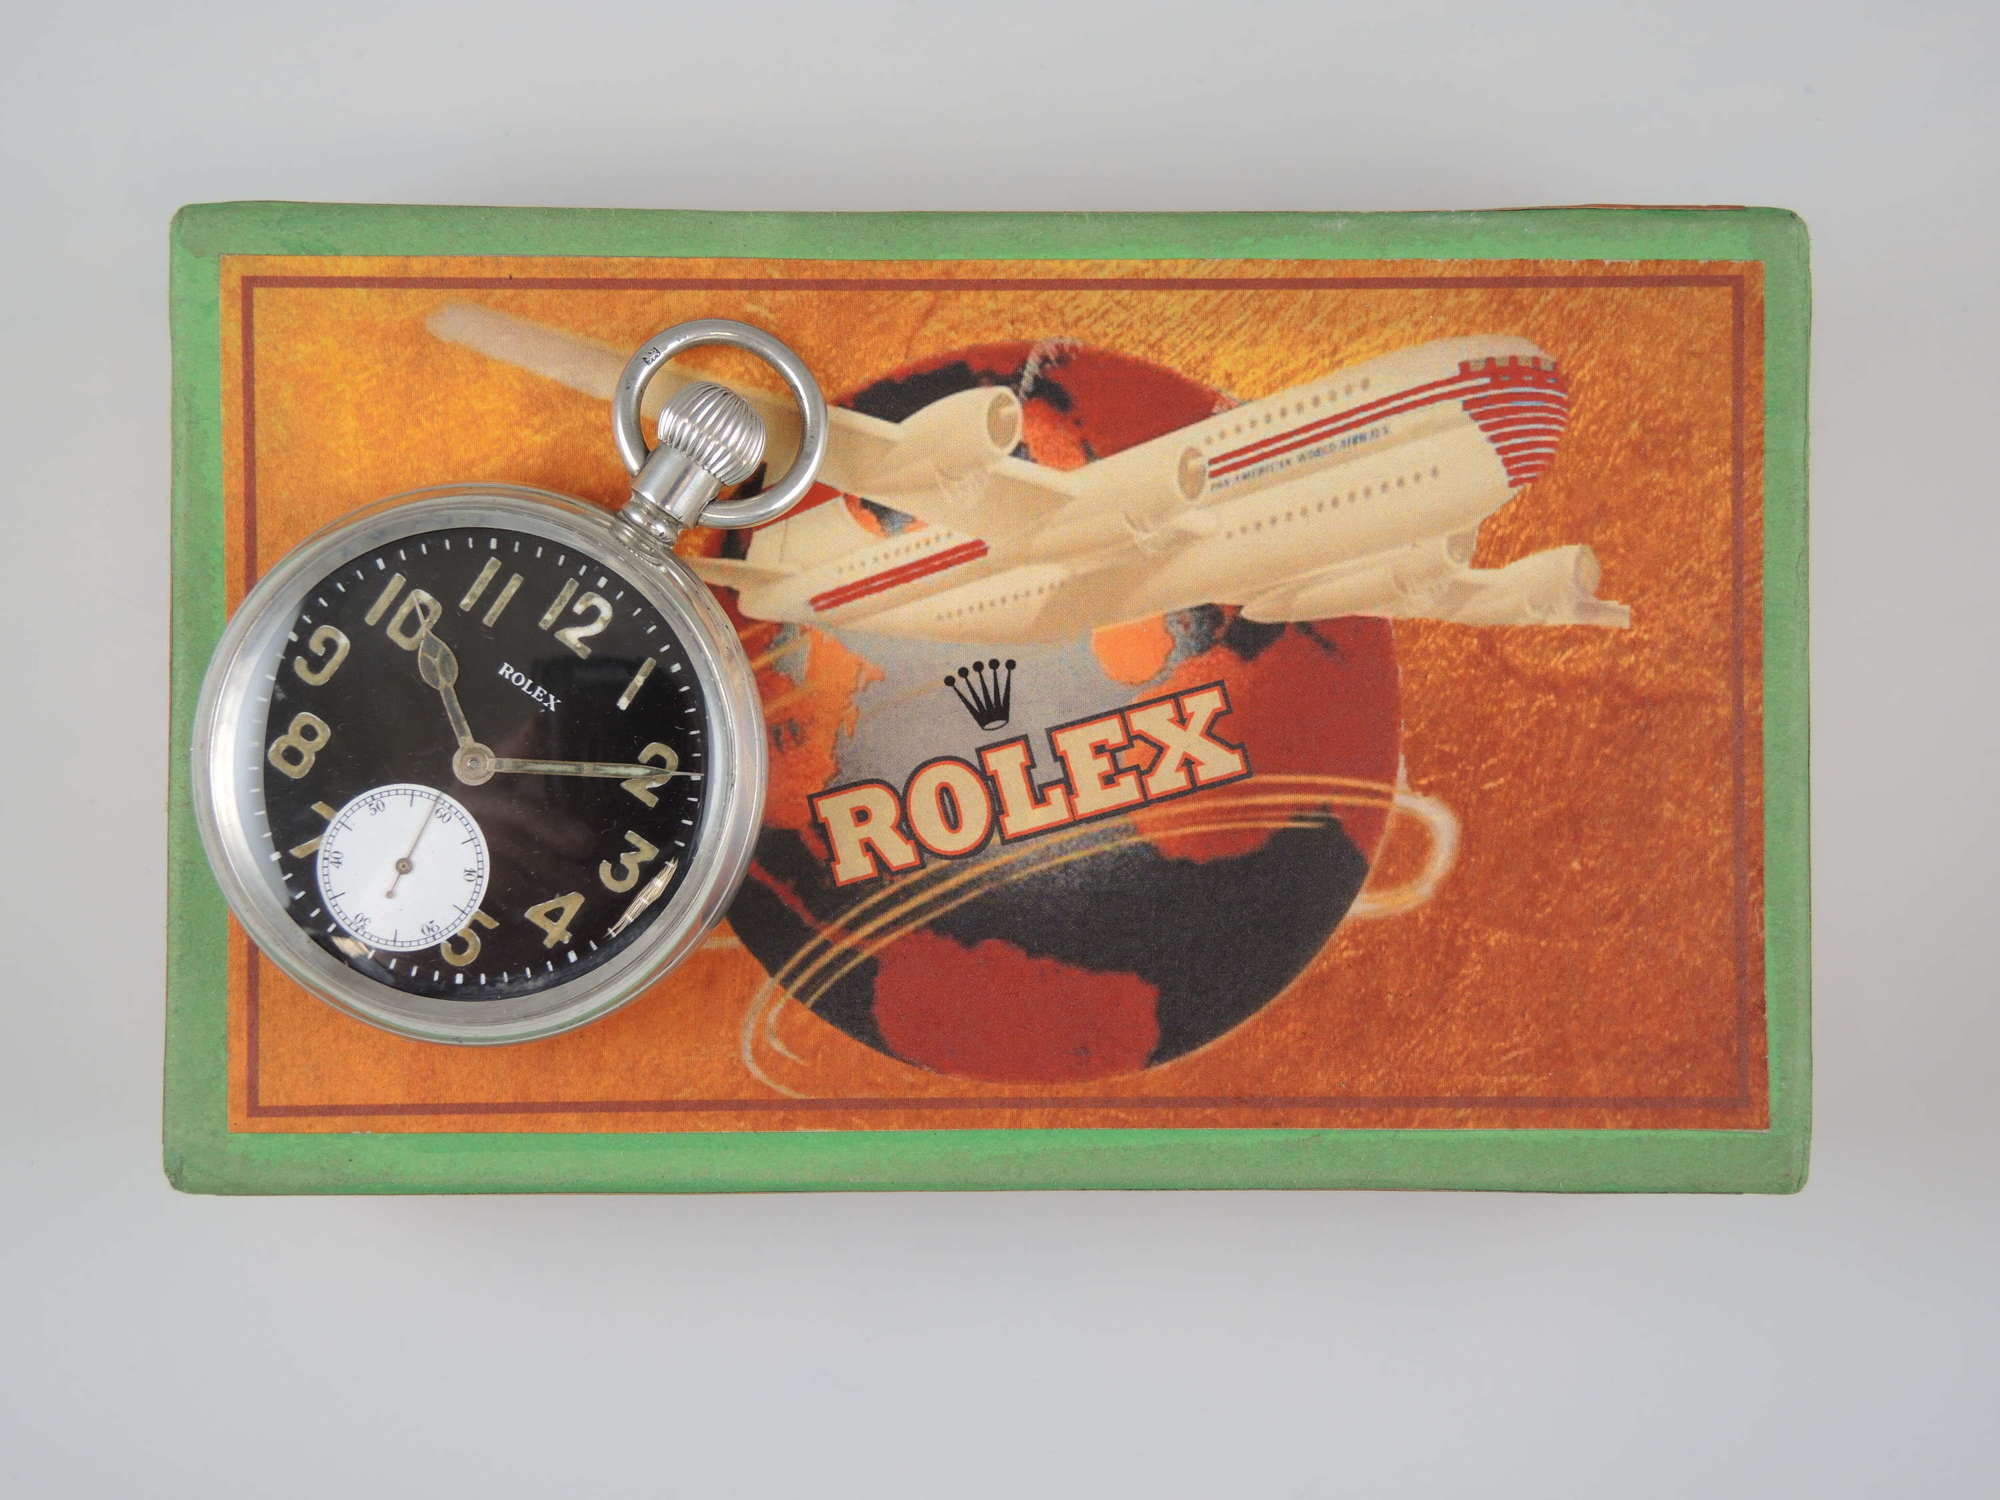 Genuine English silver black dial Rolex pocket watch c1919